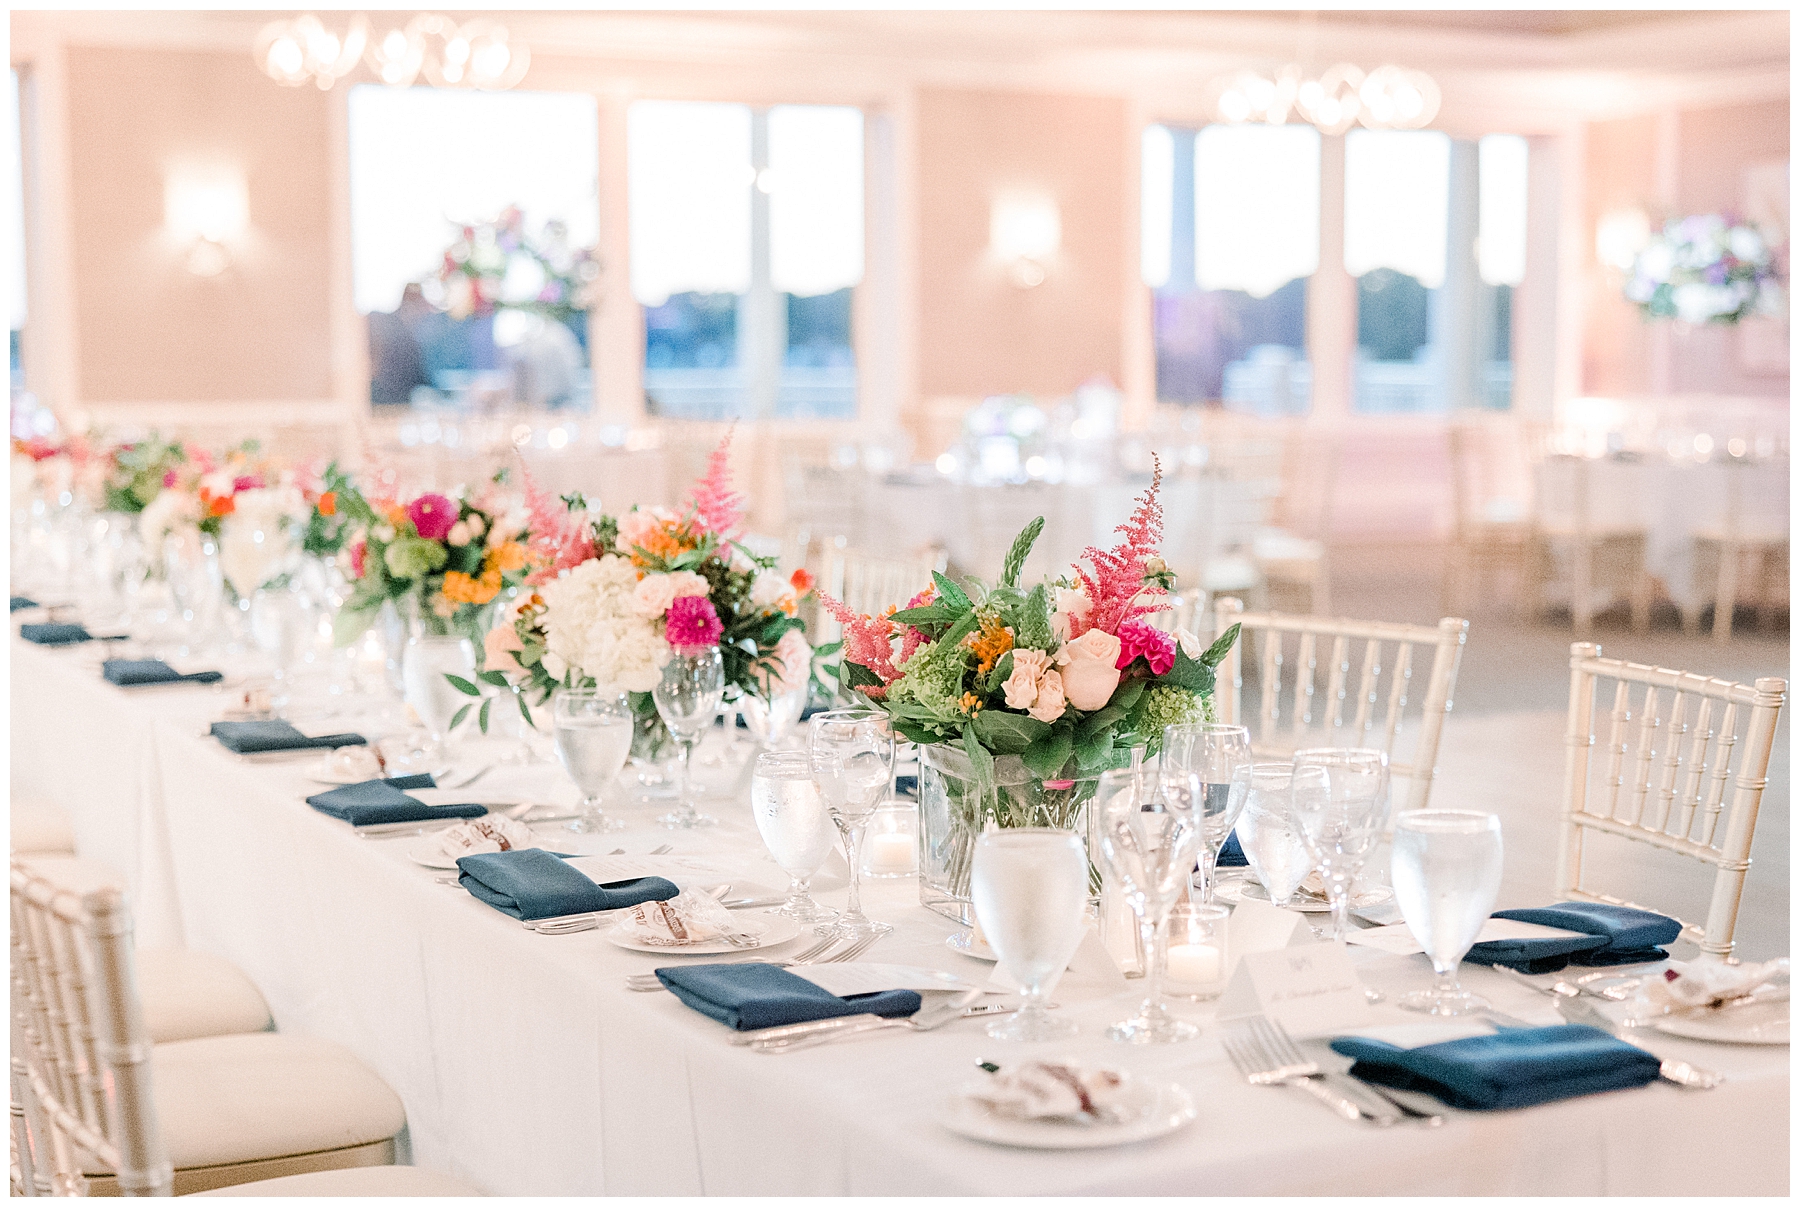 beautiful place setting from Elegant Club at New Seabury Wedding reception in Cape Cod